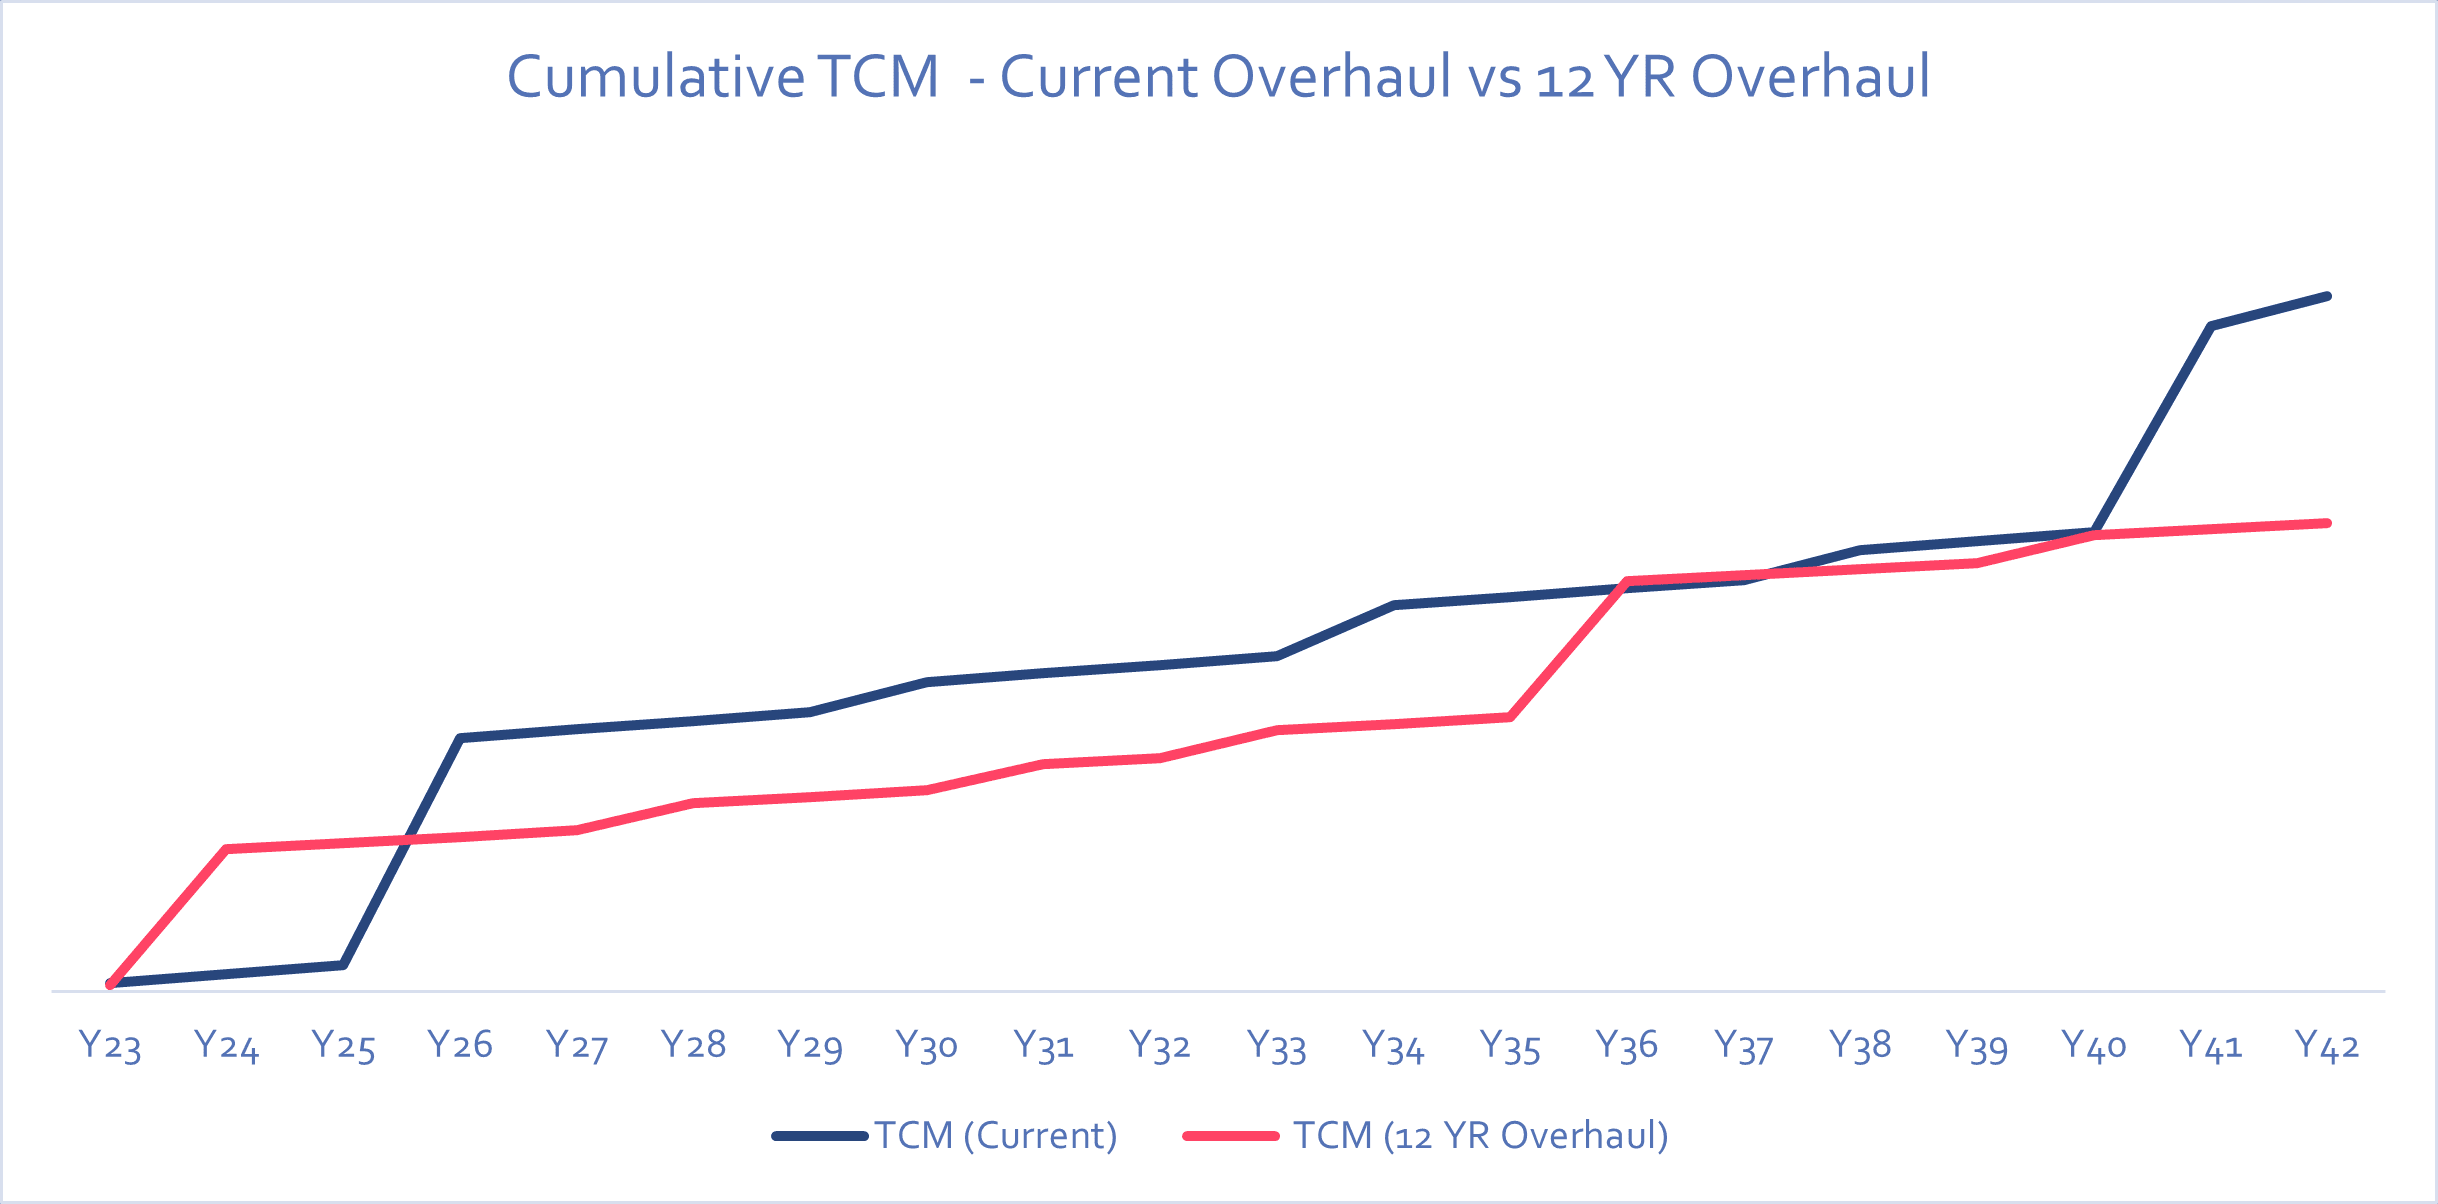 Figure: Trade-off Analysis - Cumulative Total Cost of Maintenance of Current Overhaul vs 12 YR Overhaul